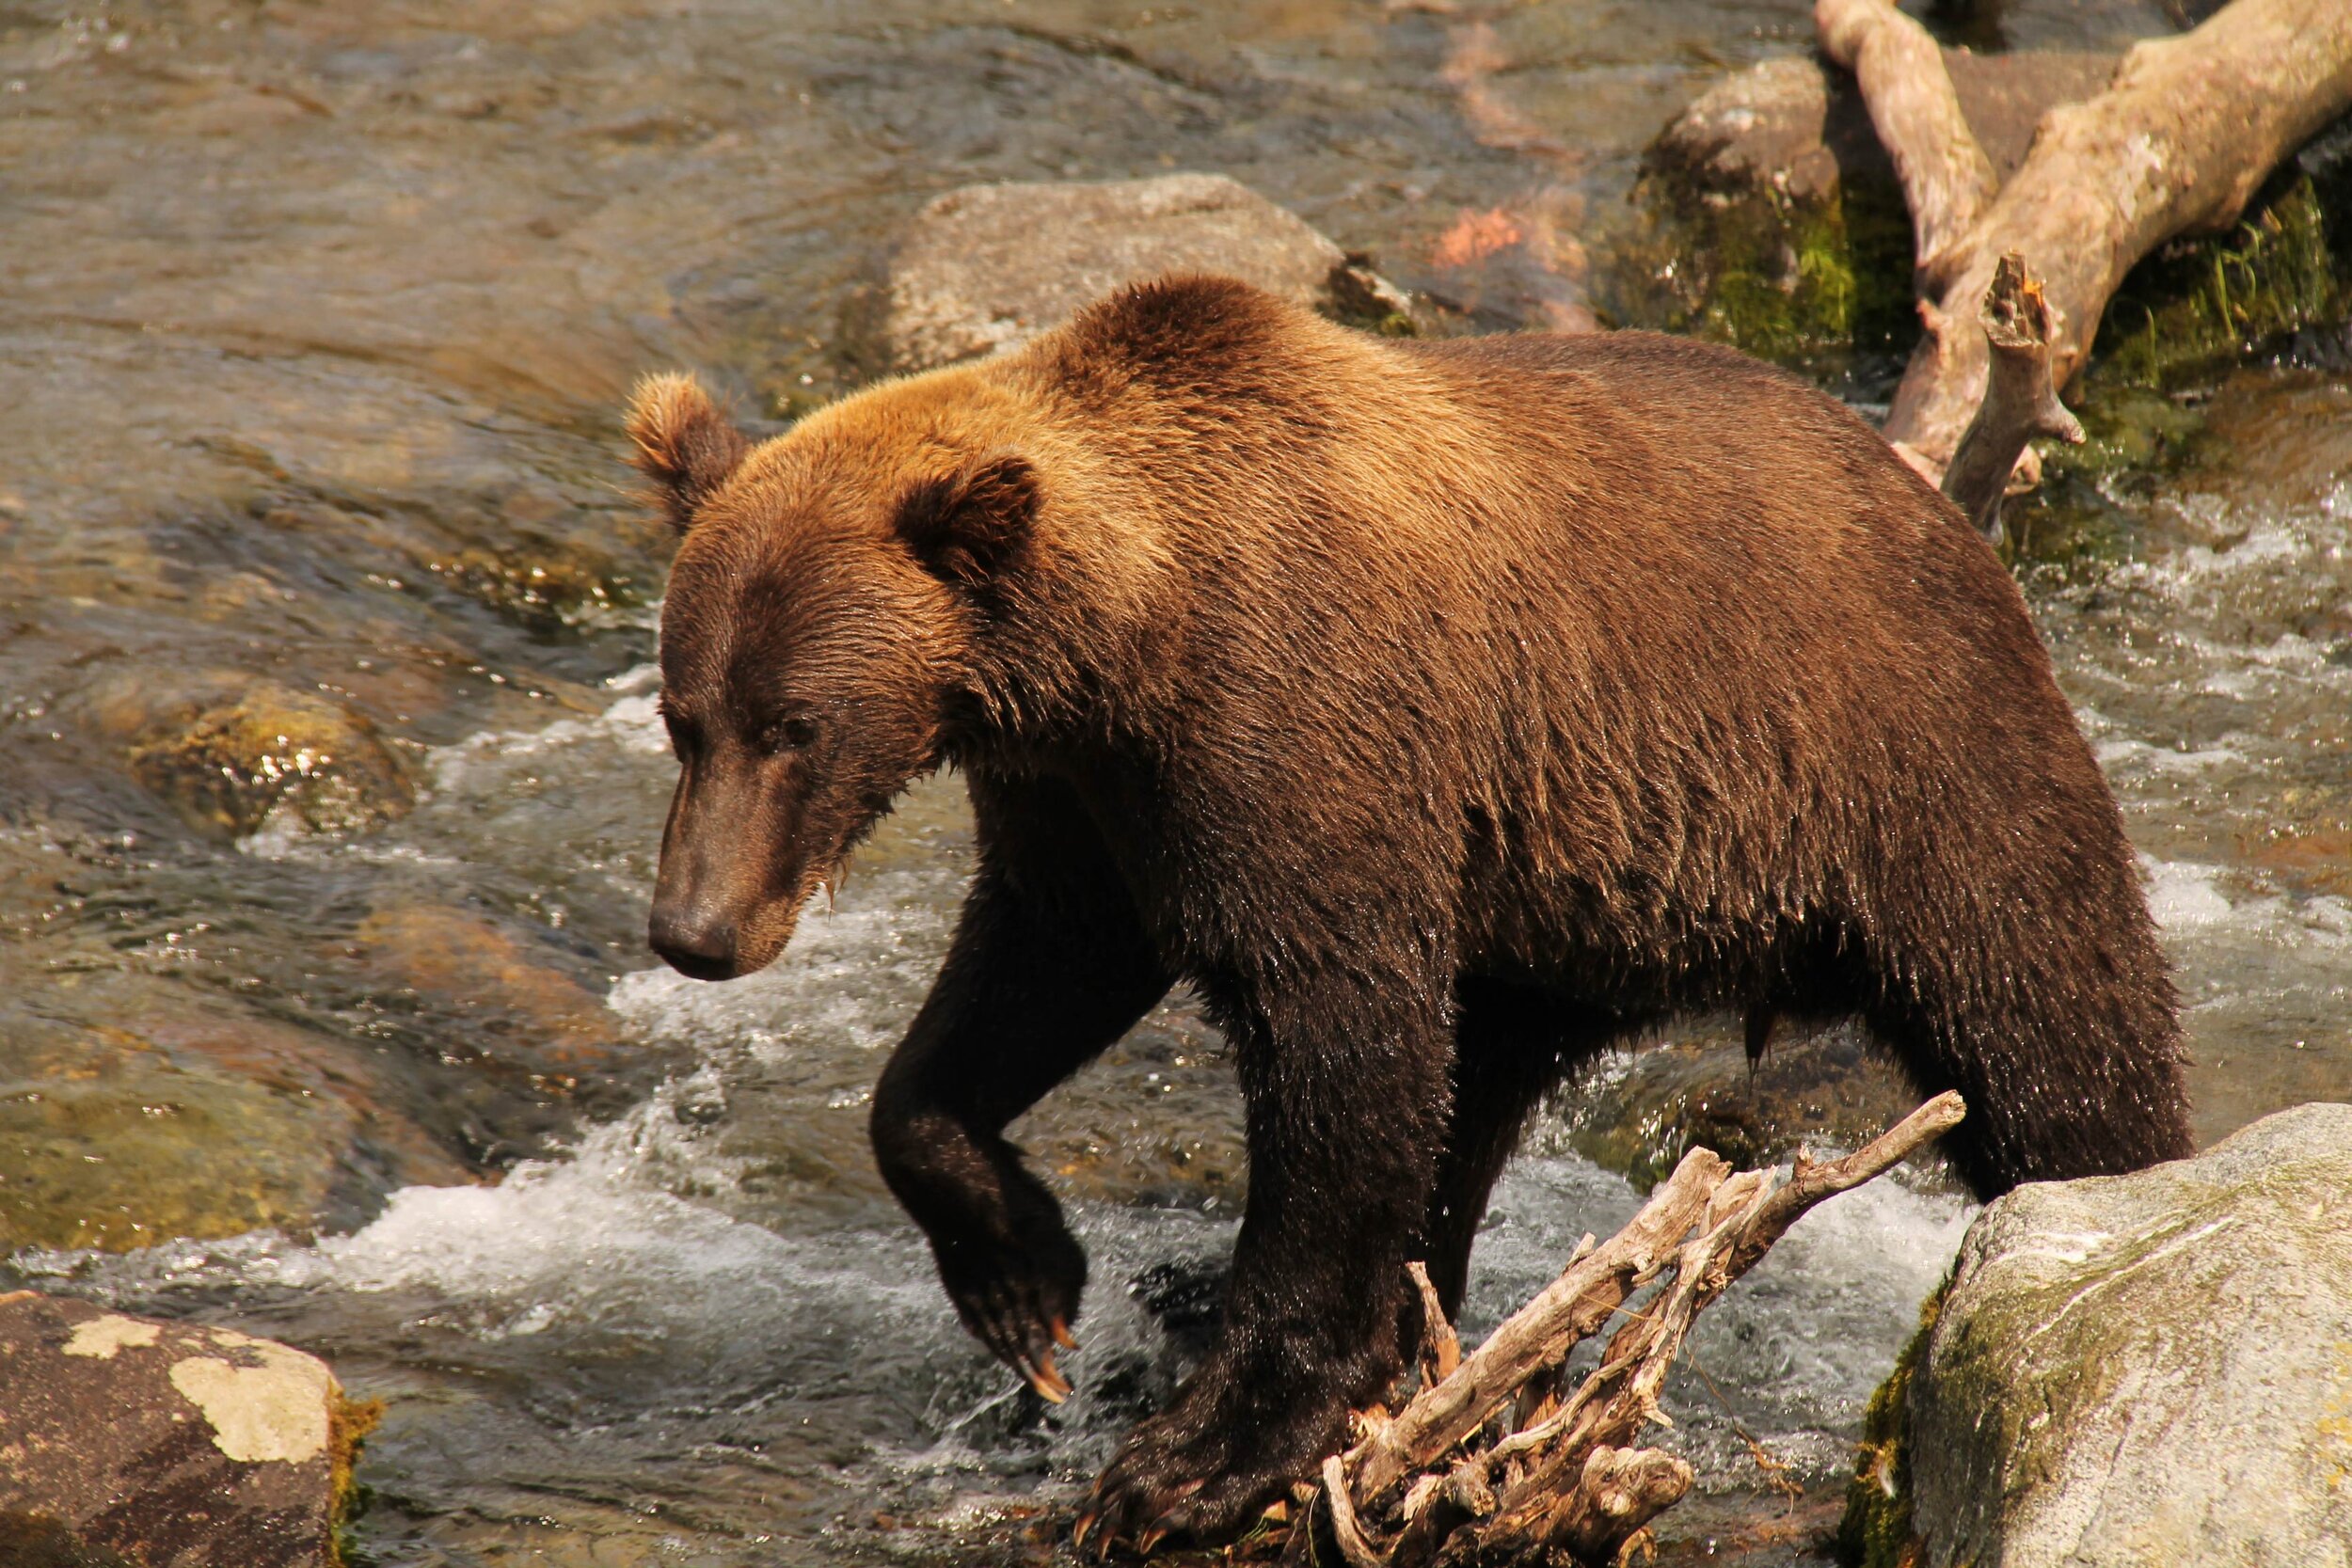  A brown bear wades through the Brooks River.  